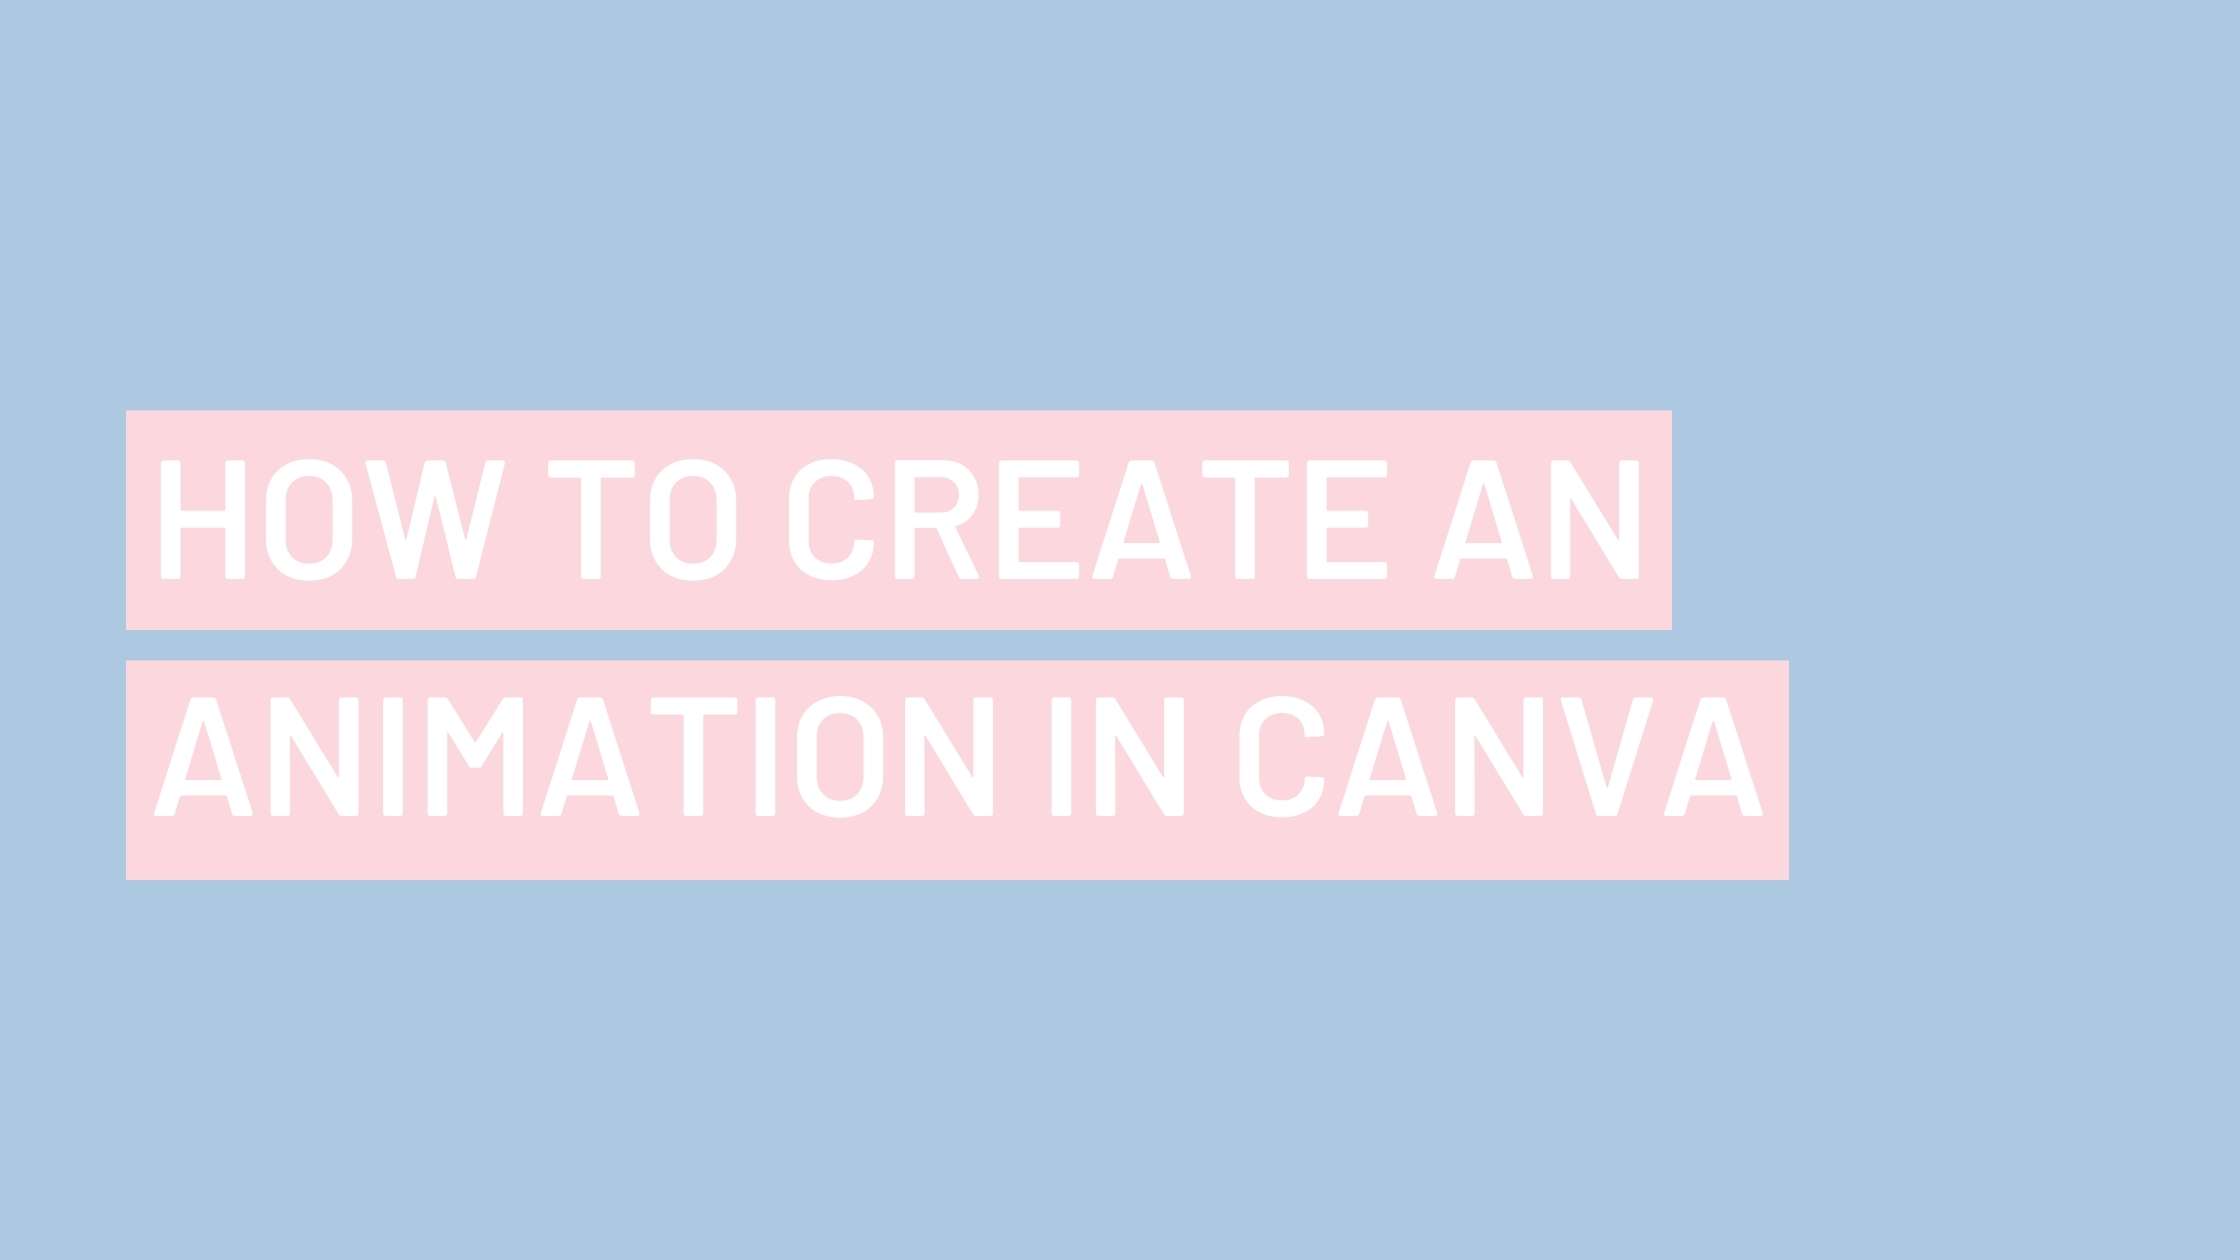 How to Create an Animation in Canva - Daisy Digital Marketing